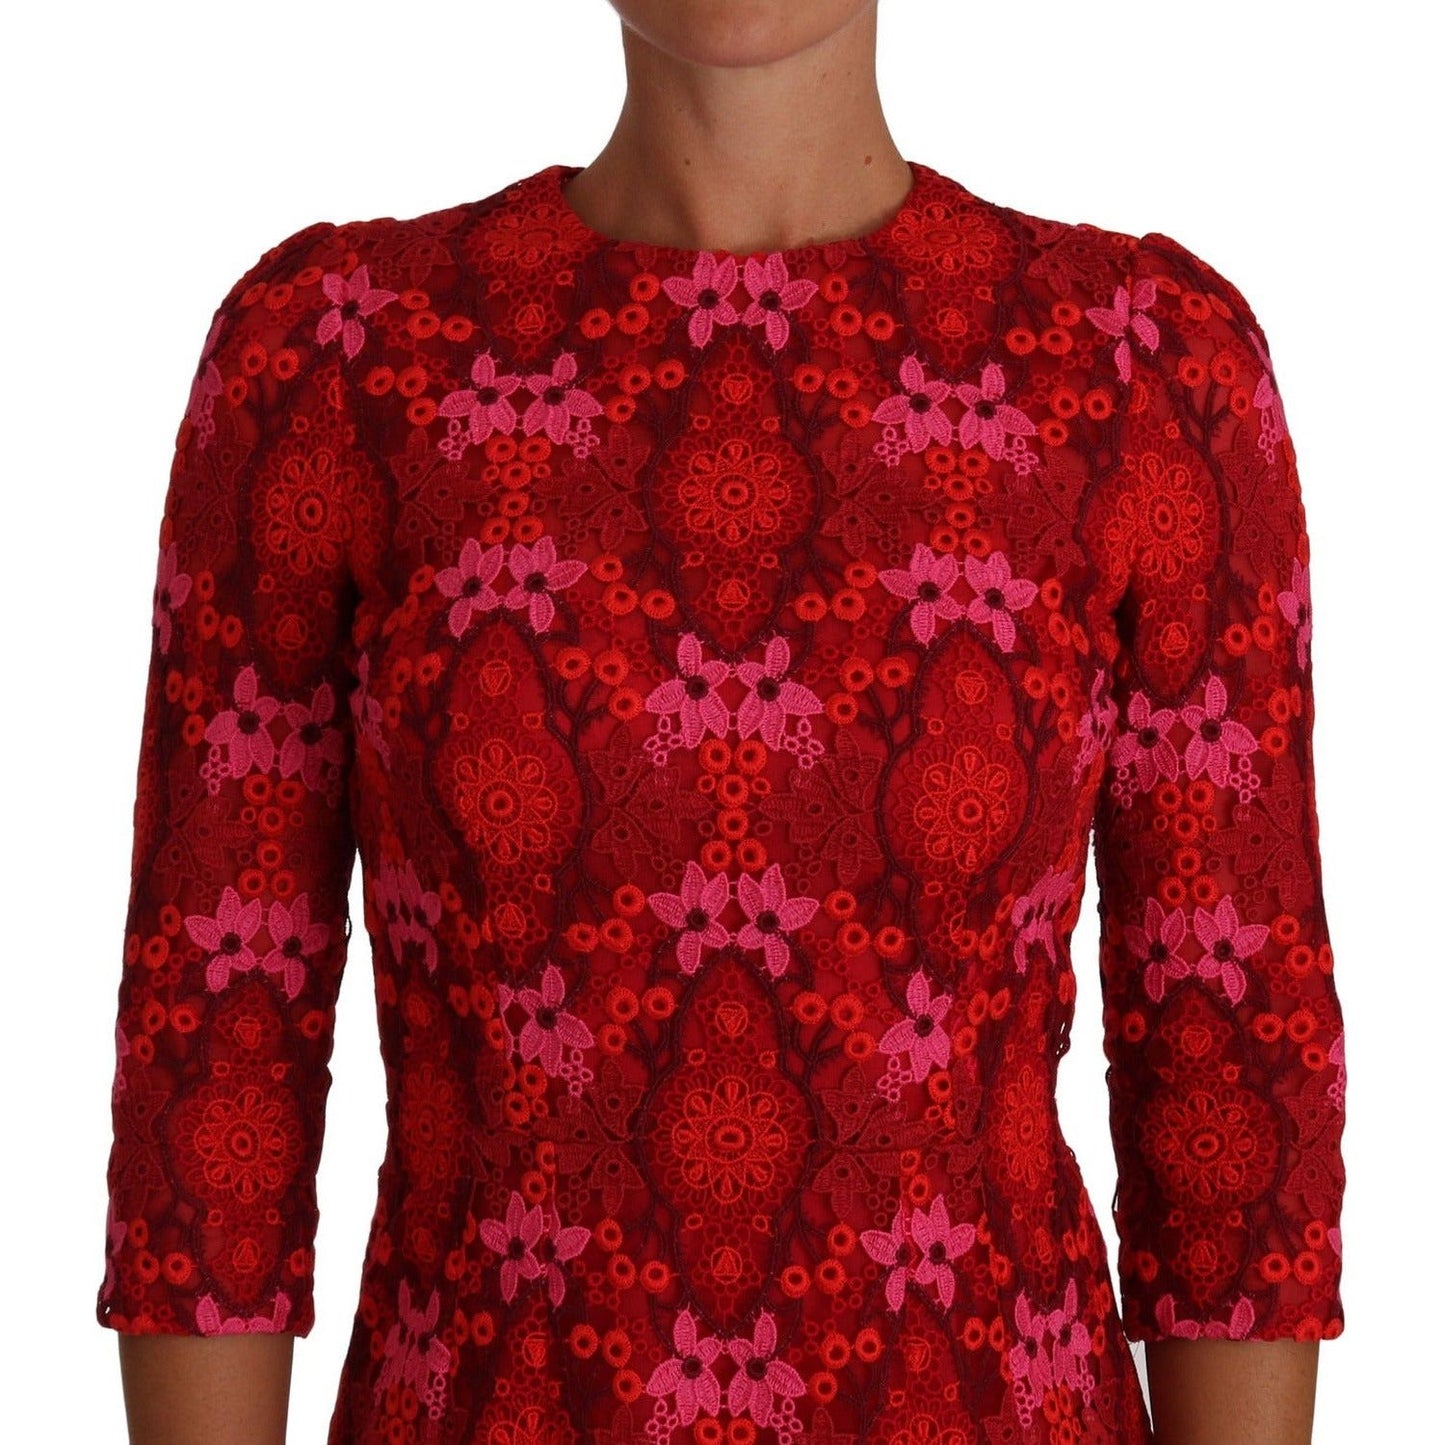 Dolce & Gabbana Elegant Floral Crochet Knee-Length Dress floral-crochet-lace-red-pink-sheath-dress 635562-floral-crochet-lace-red-pink-sheath-dress-3.jpg